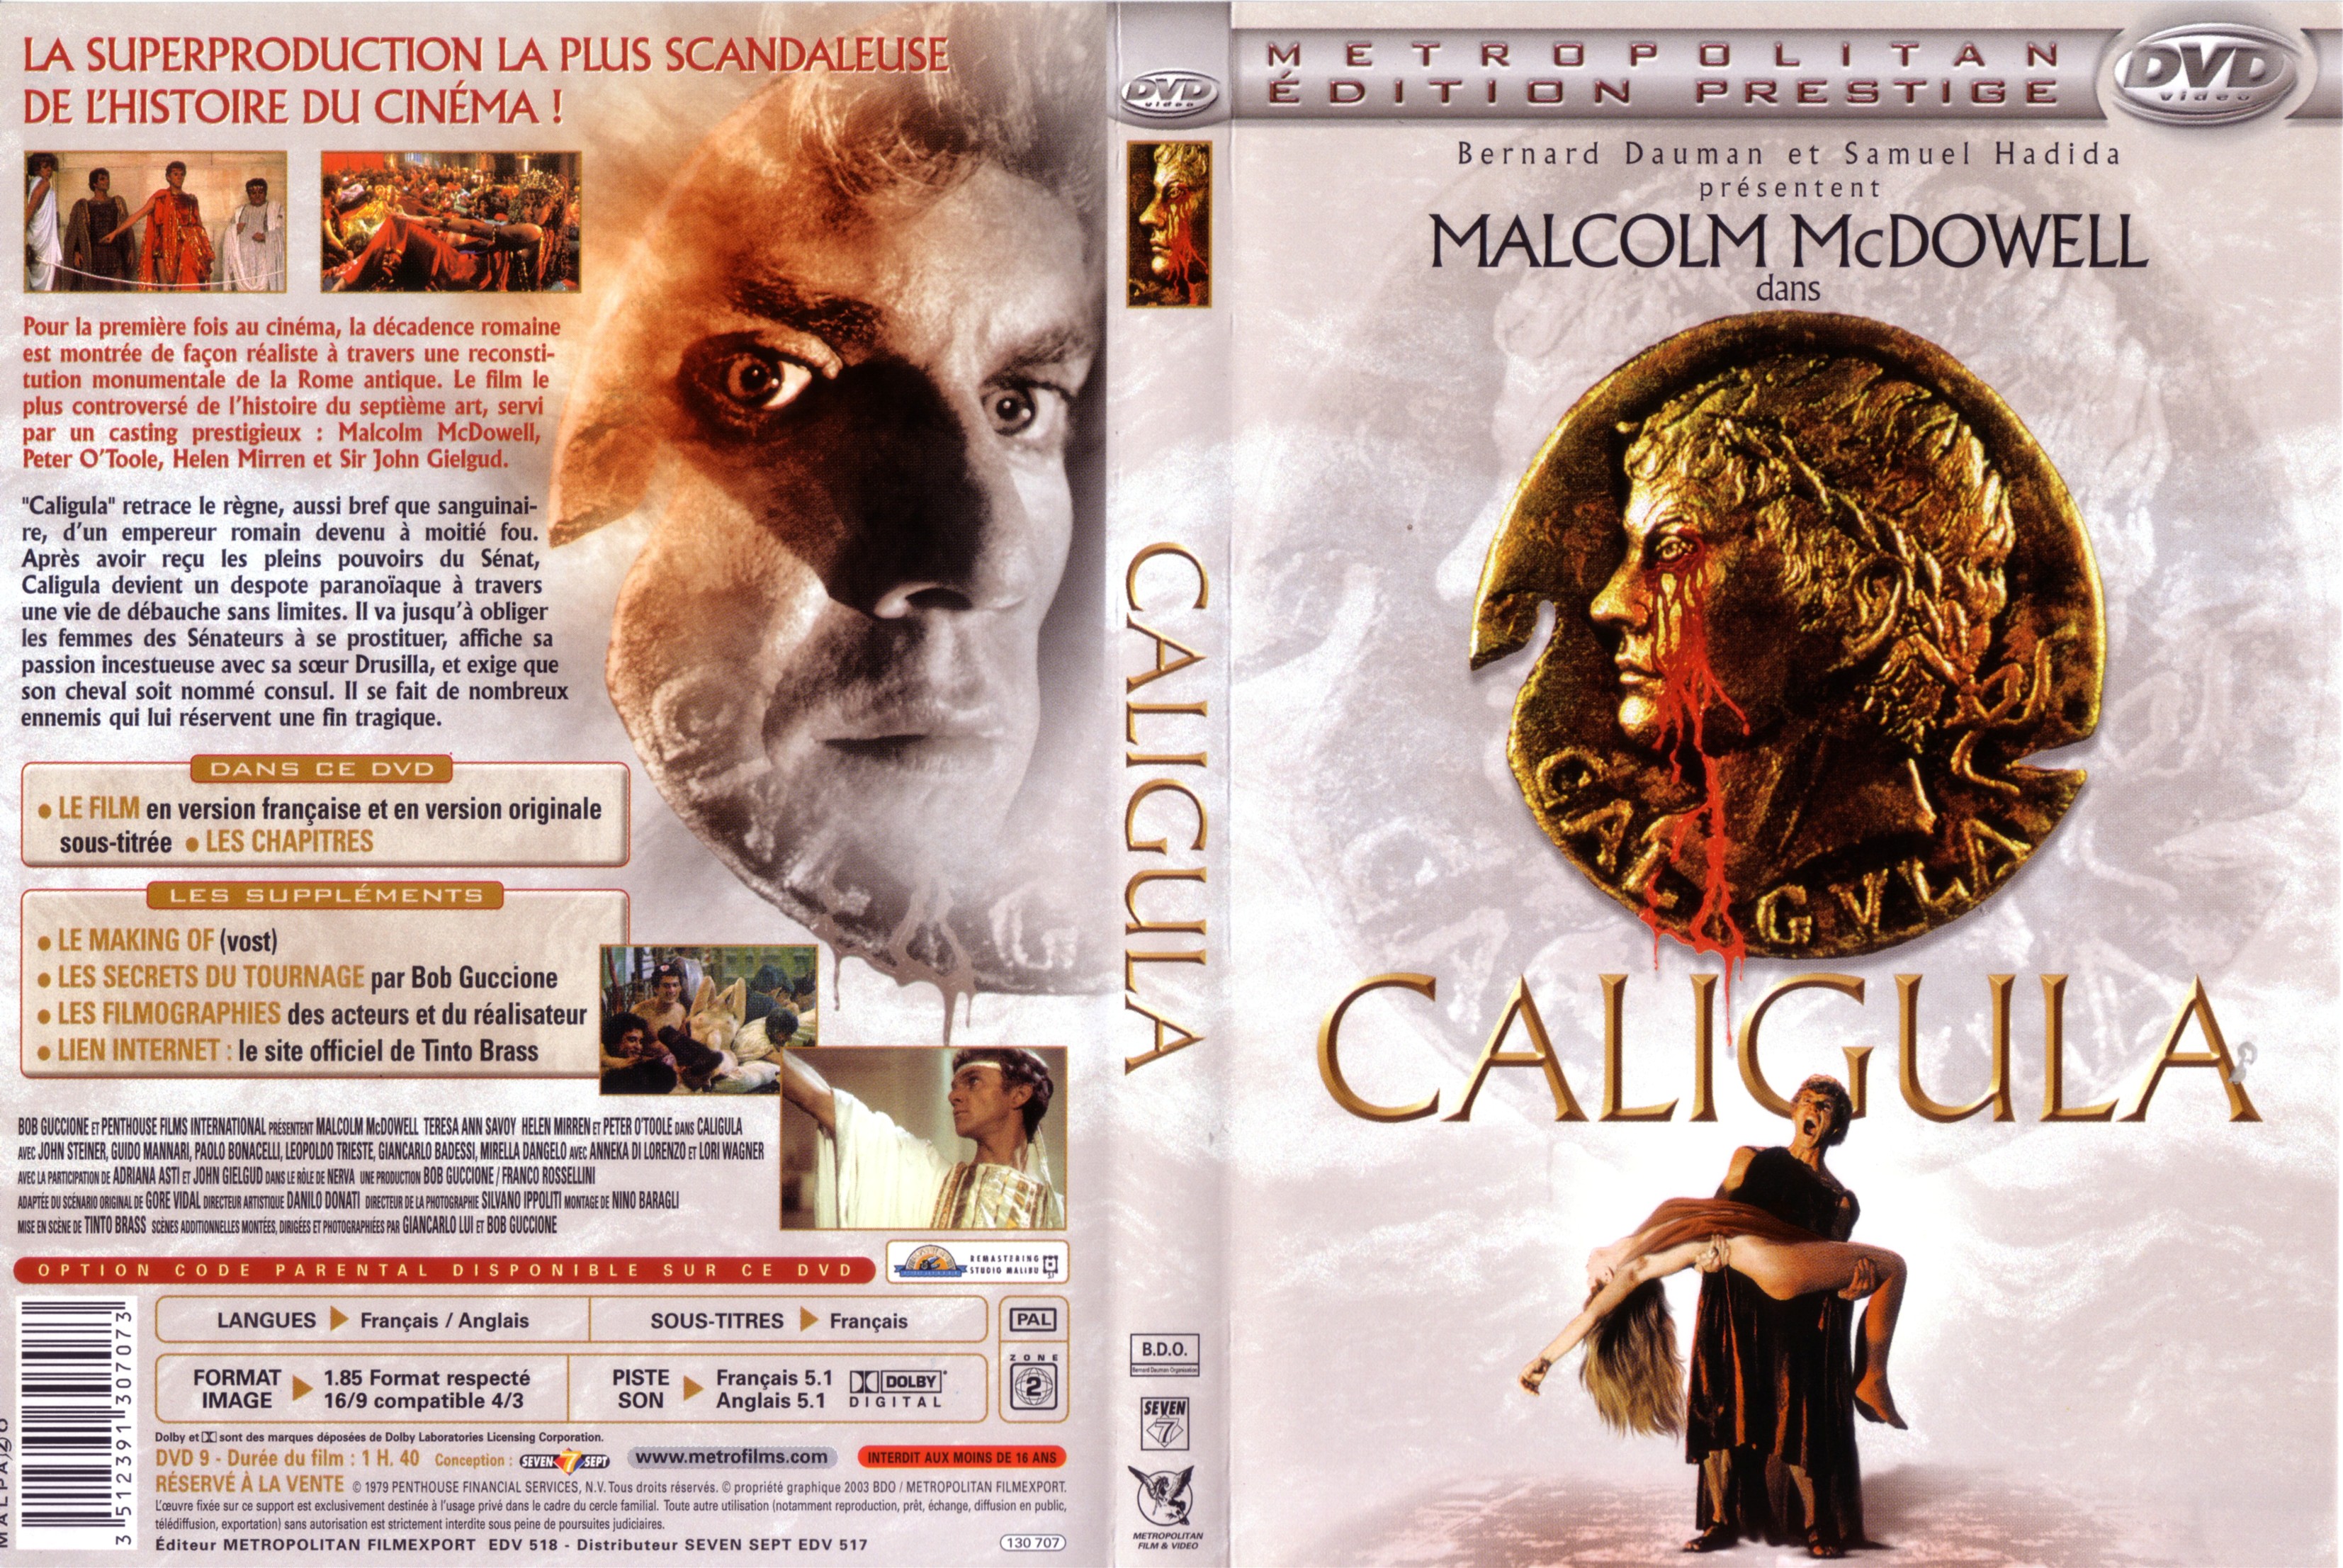 Jaquette DVD Caligula